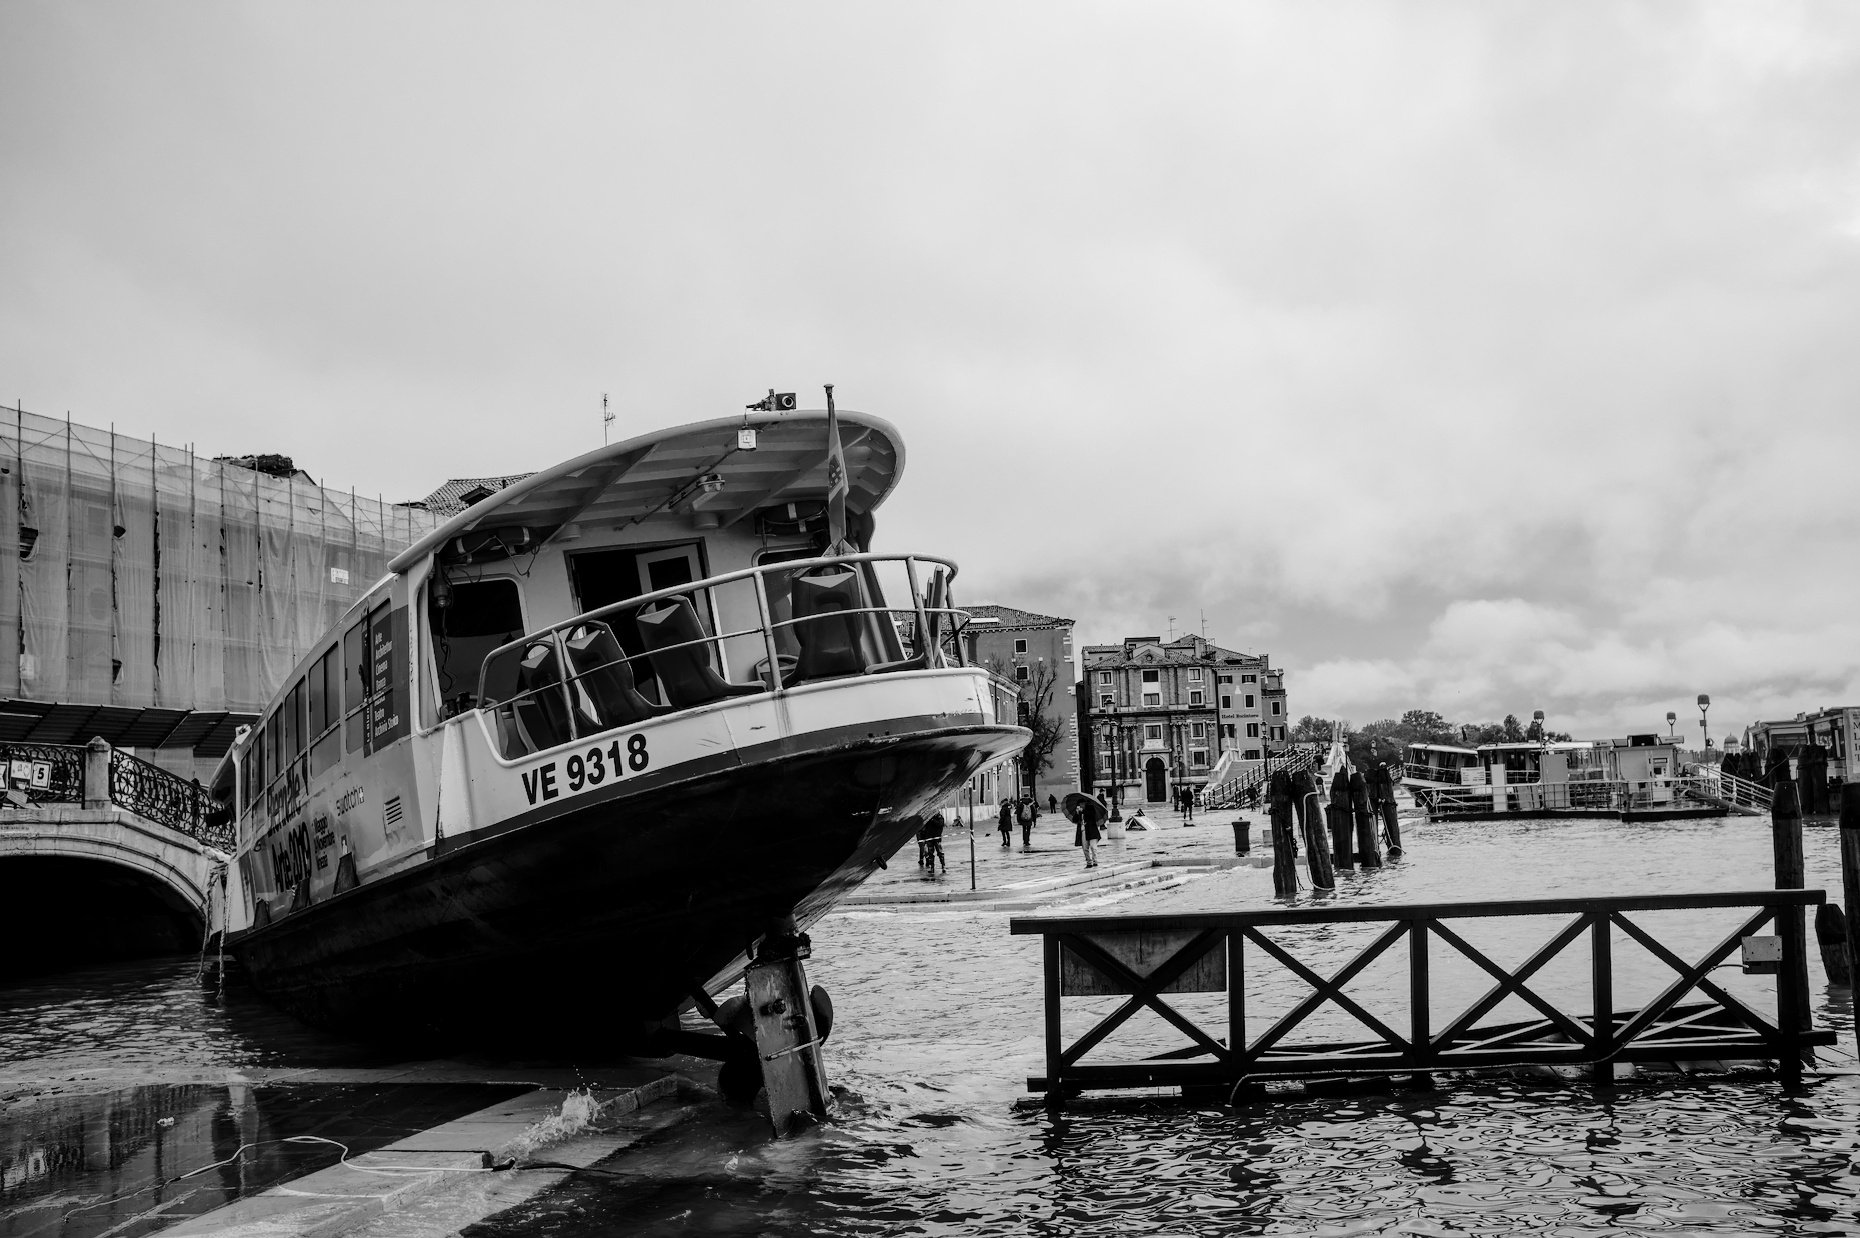 Venice underwater – record high tide